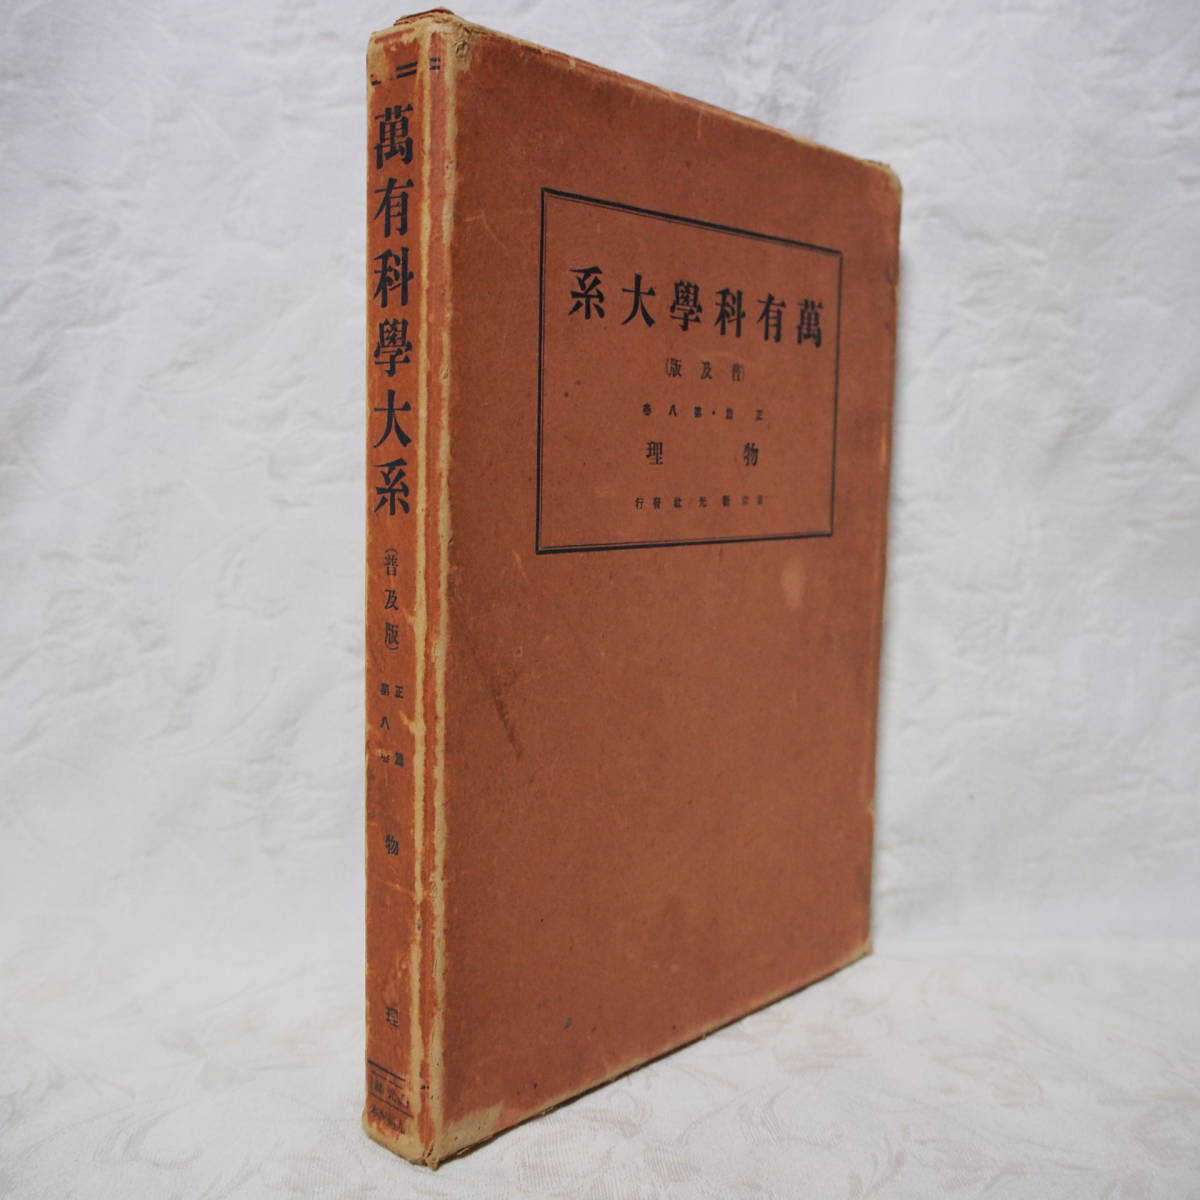 貴重・資料 保存版 !! 「万有科学体系 第八巻 物理」と書かれた 昭和初期 古典物理学 専門書本